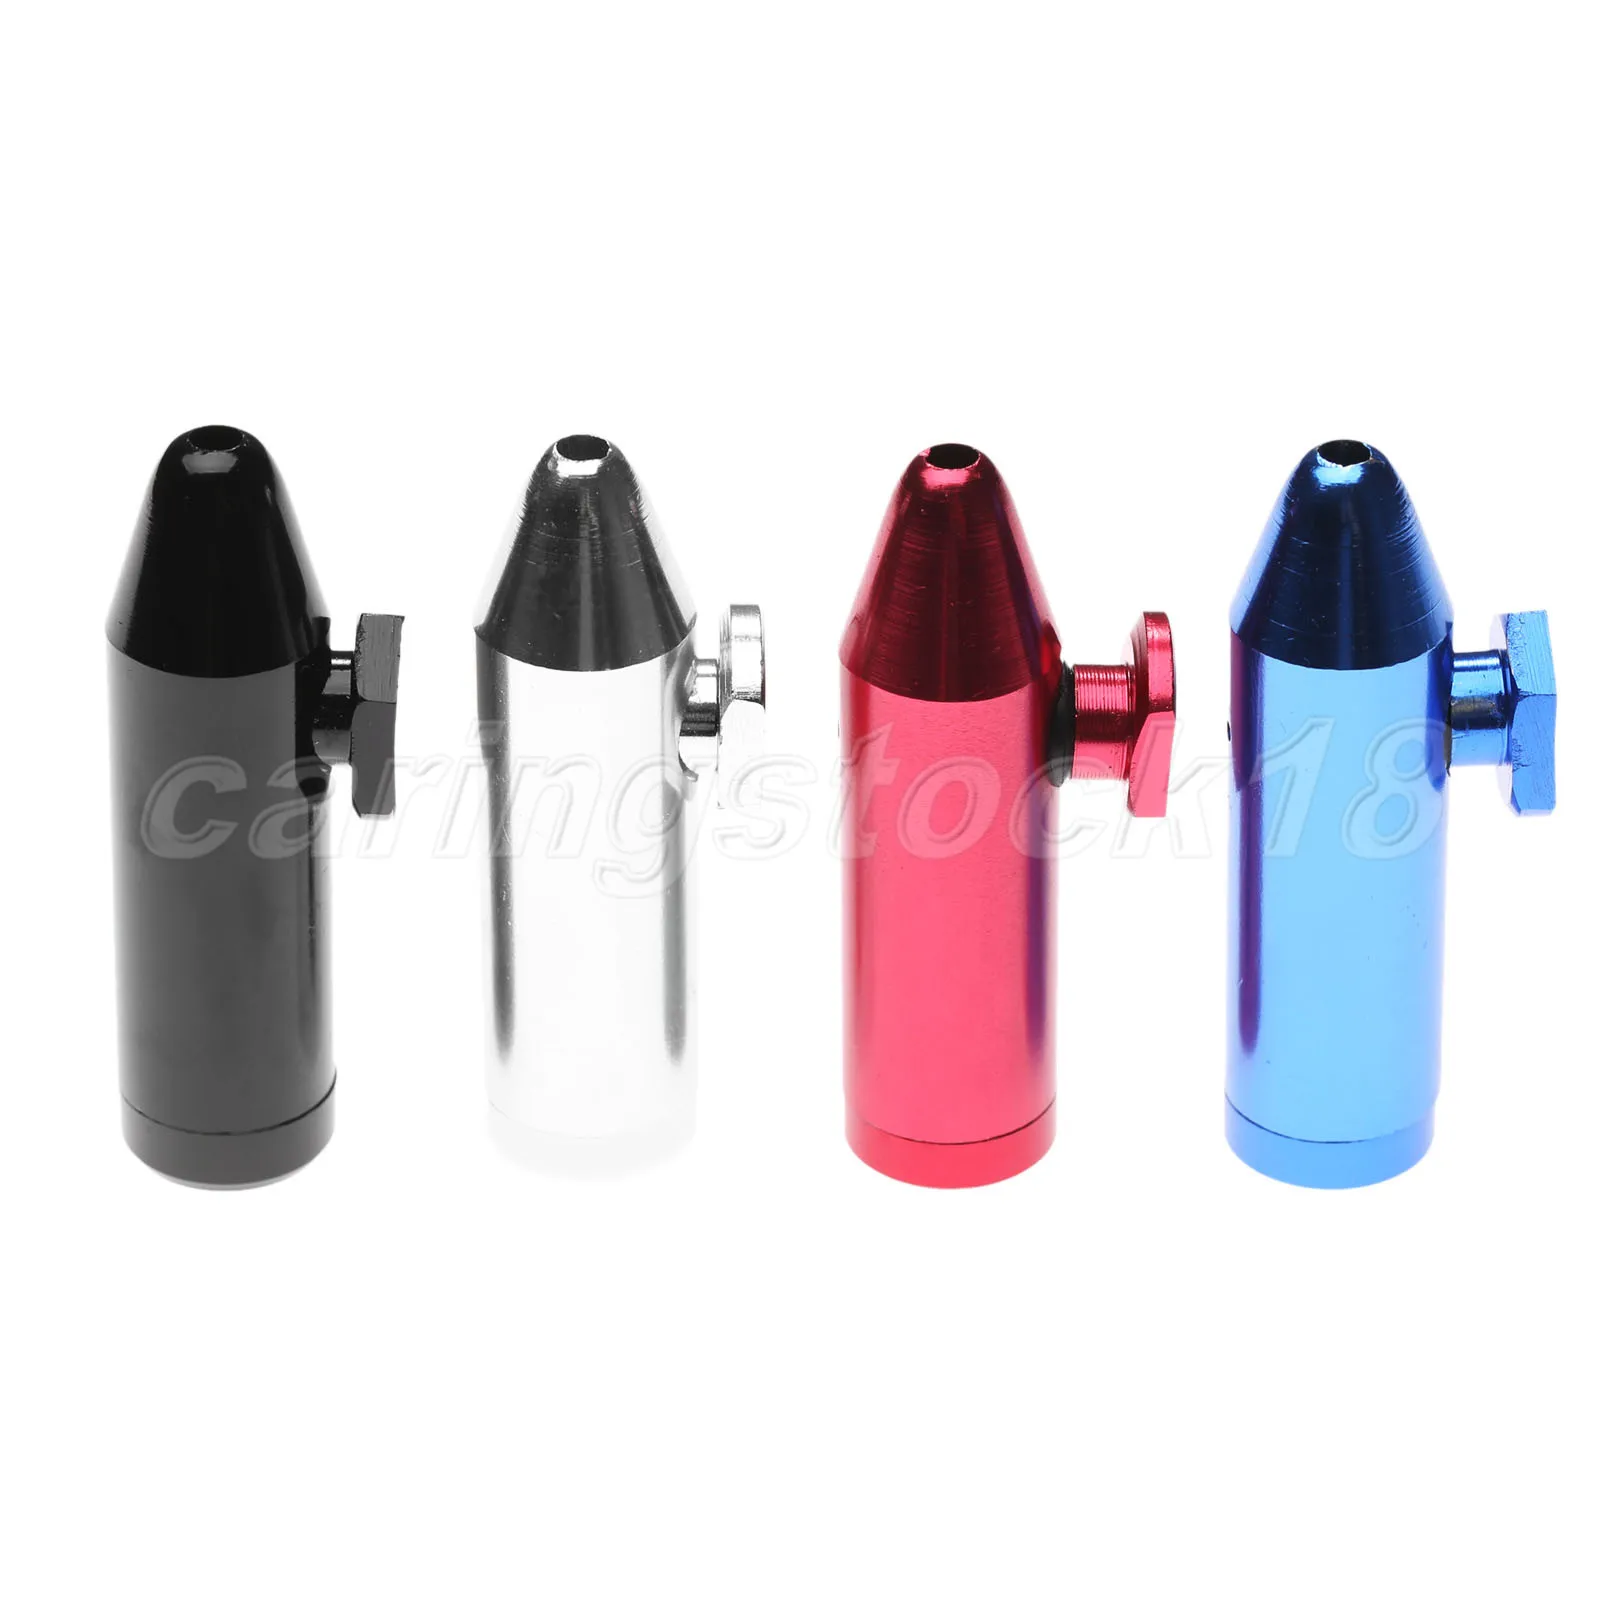 

1Pc Metal Bullet Rocket Snuff Snorter Sniffer Dispenser Smoking Tobacco Pipes Portable Men Gift Smoking Accessories